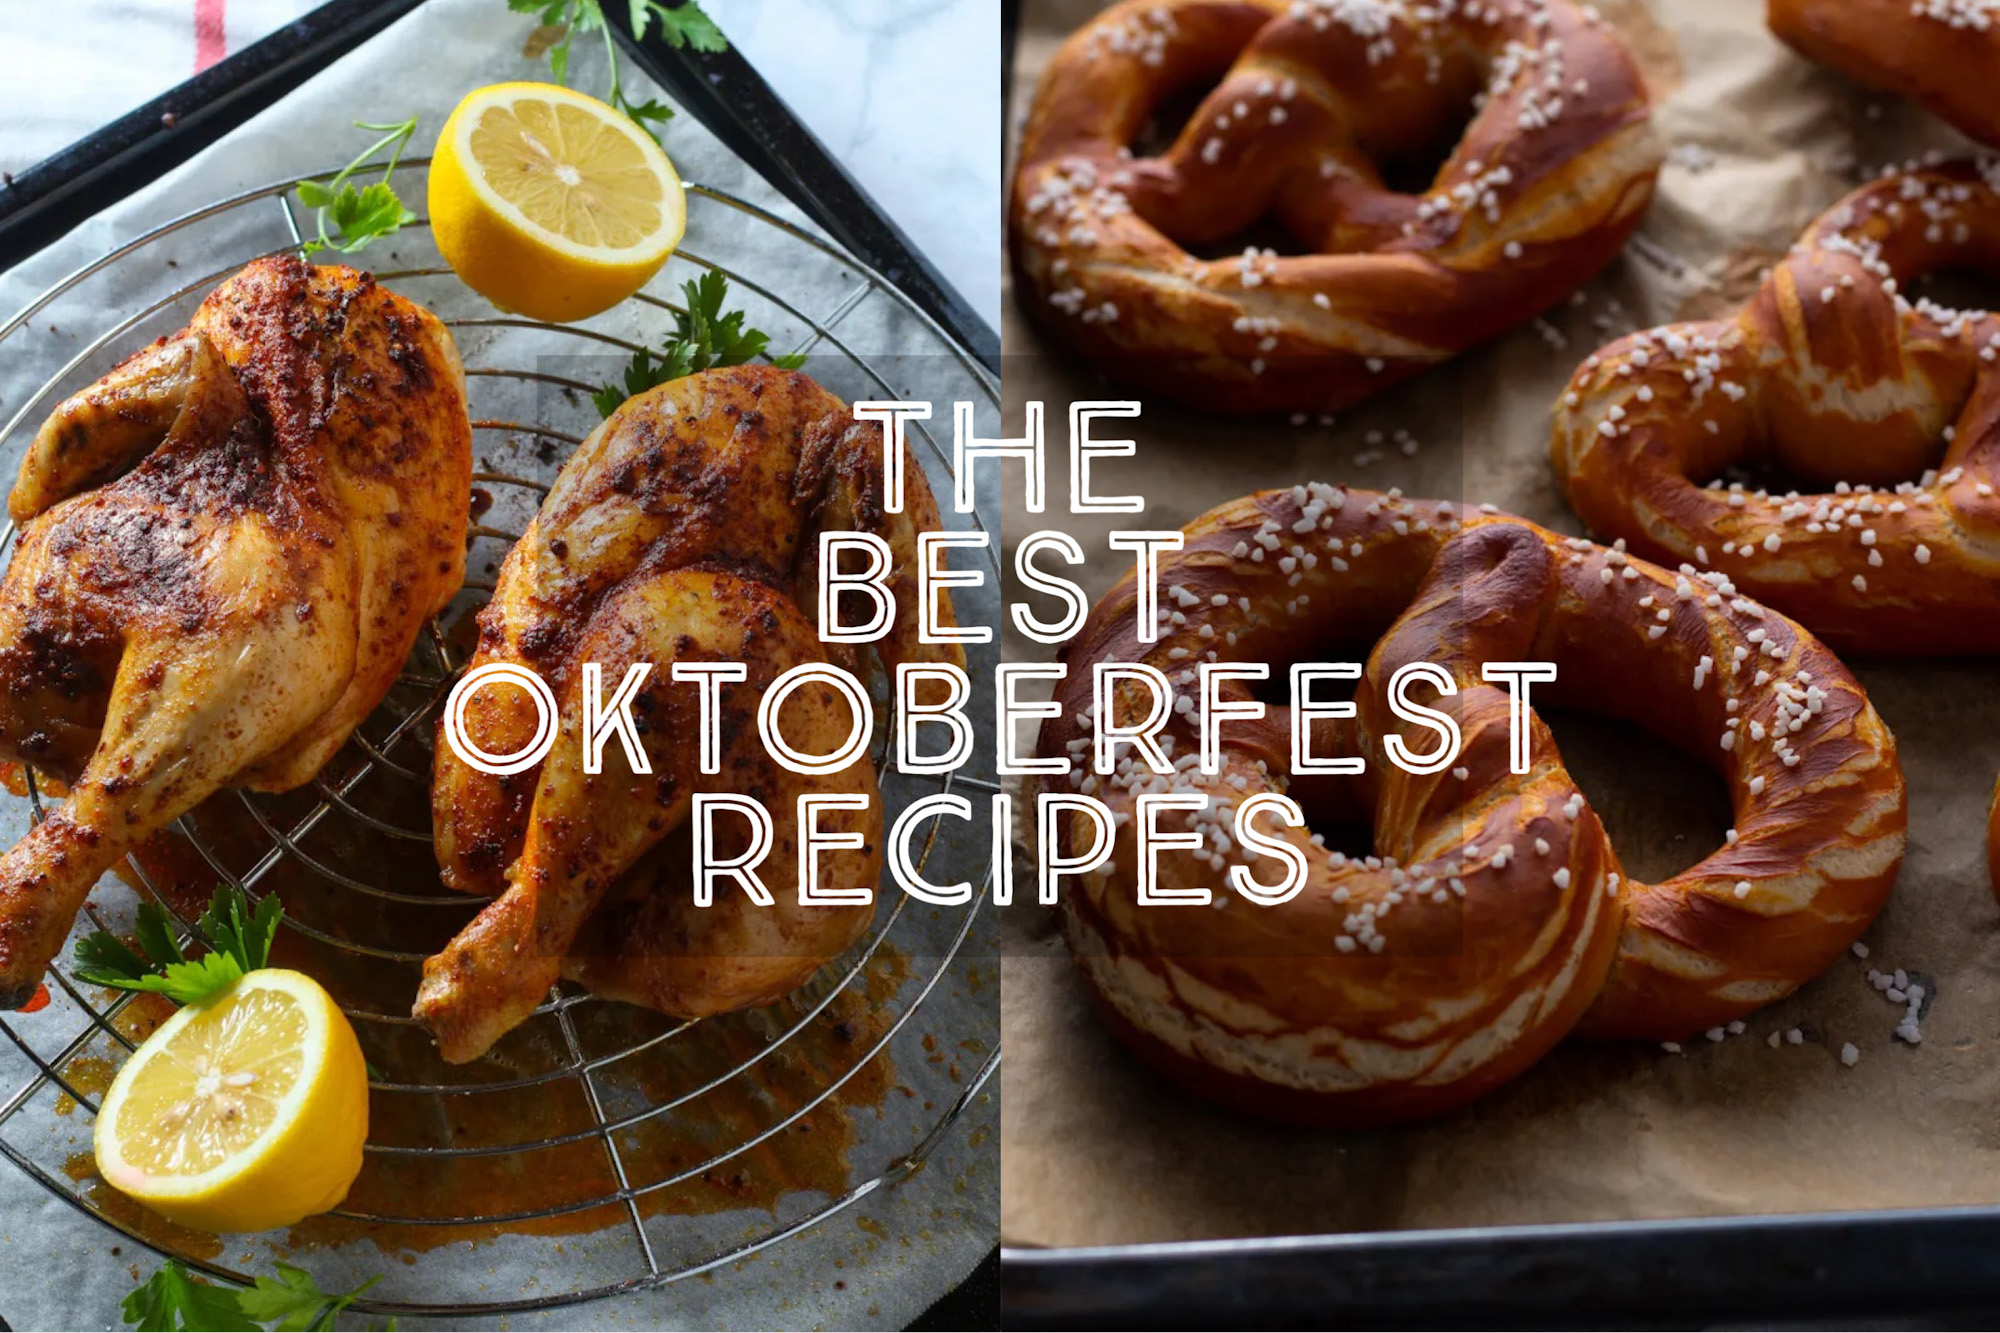 The best oktoberfest recipes title card showing Oktoberfest roast Chicken and Bavarian pretzels.